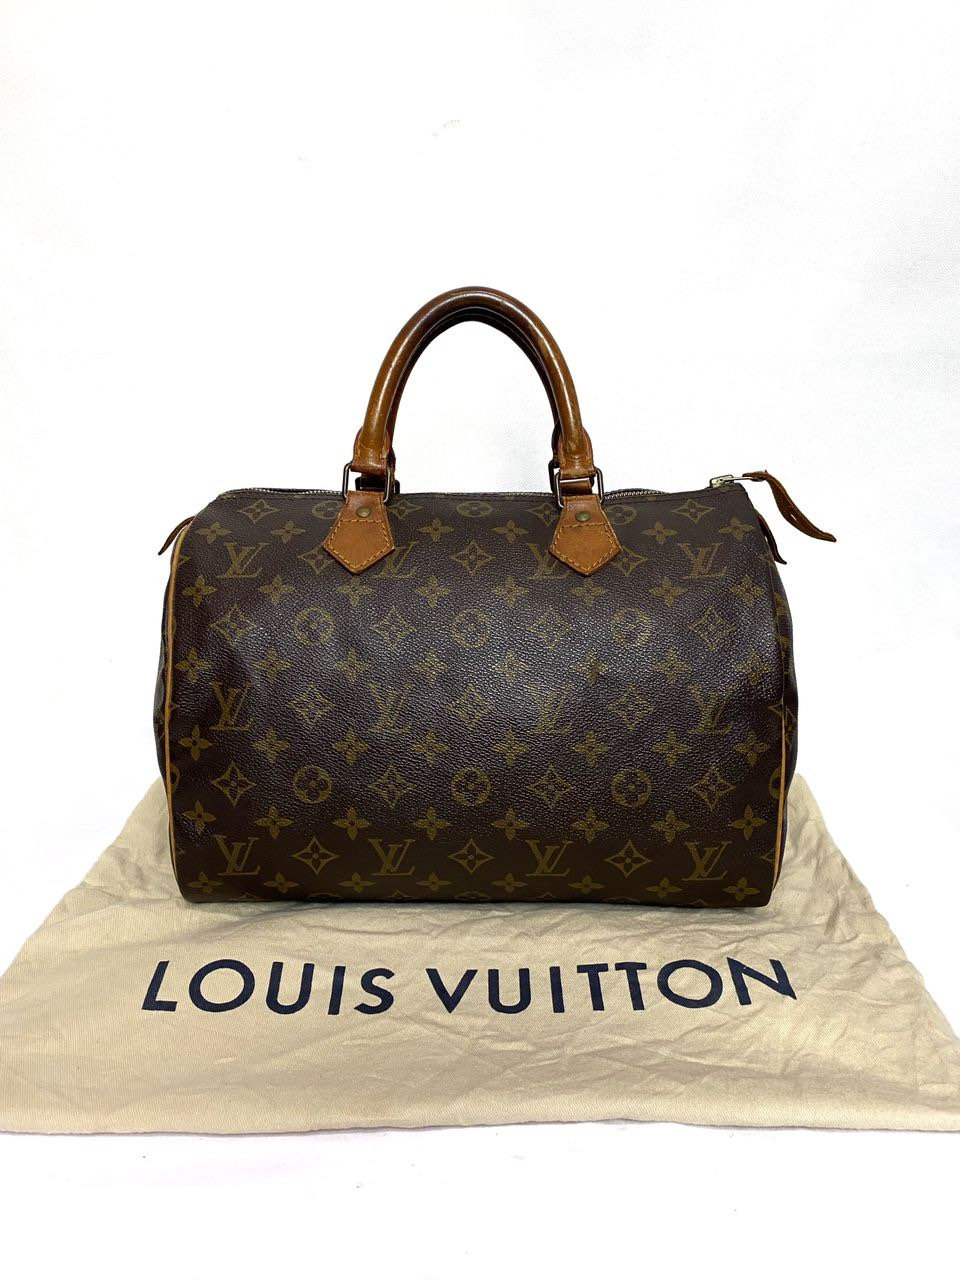 Buy Rare Louis Vuitton Online In India -  India